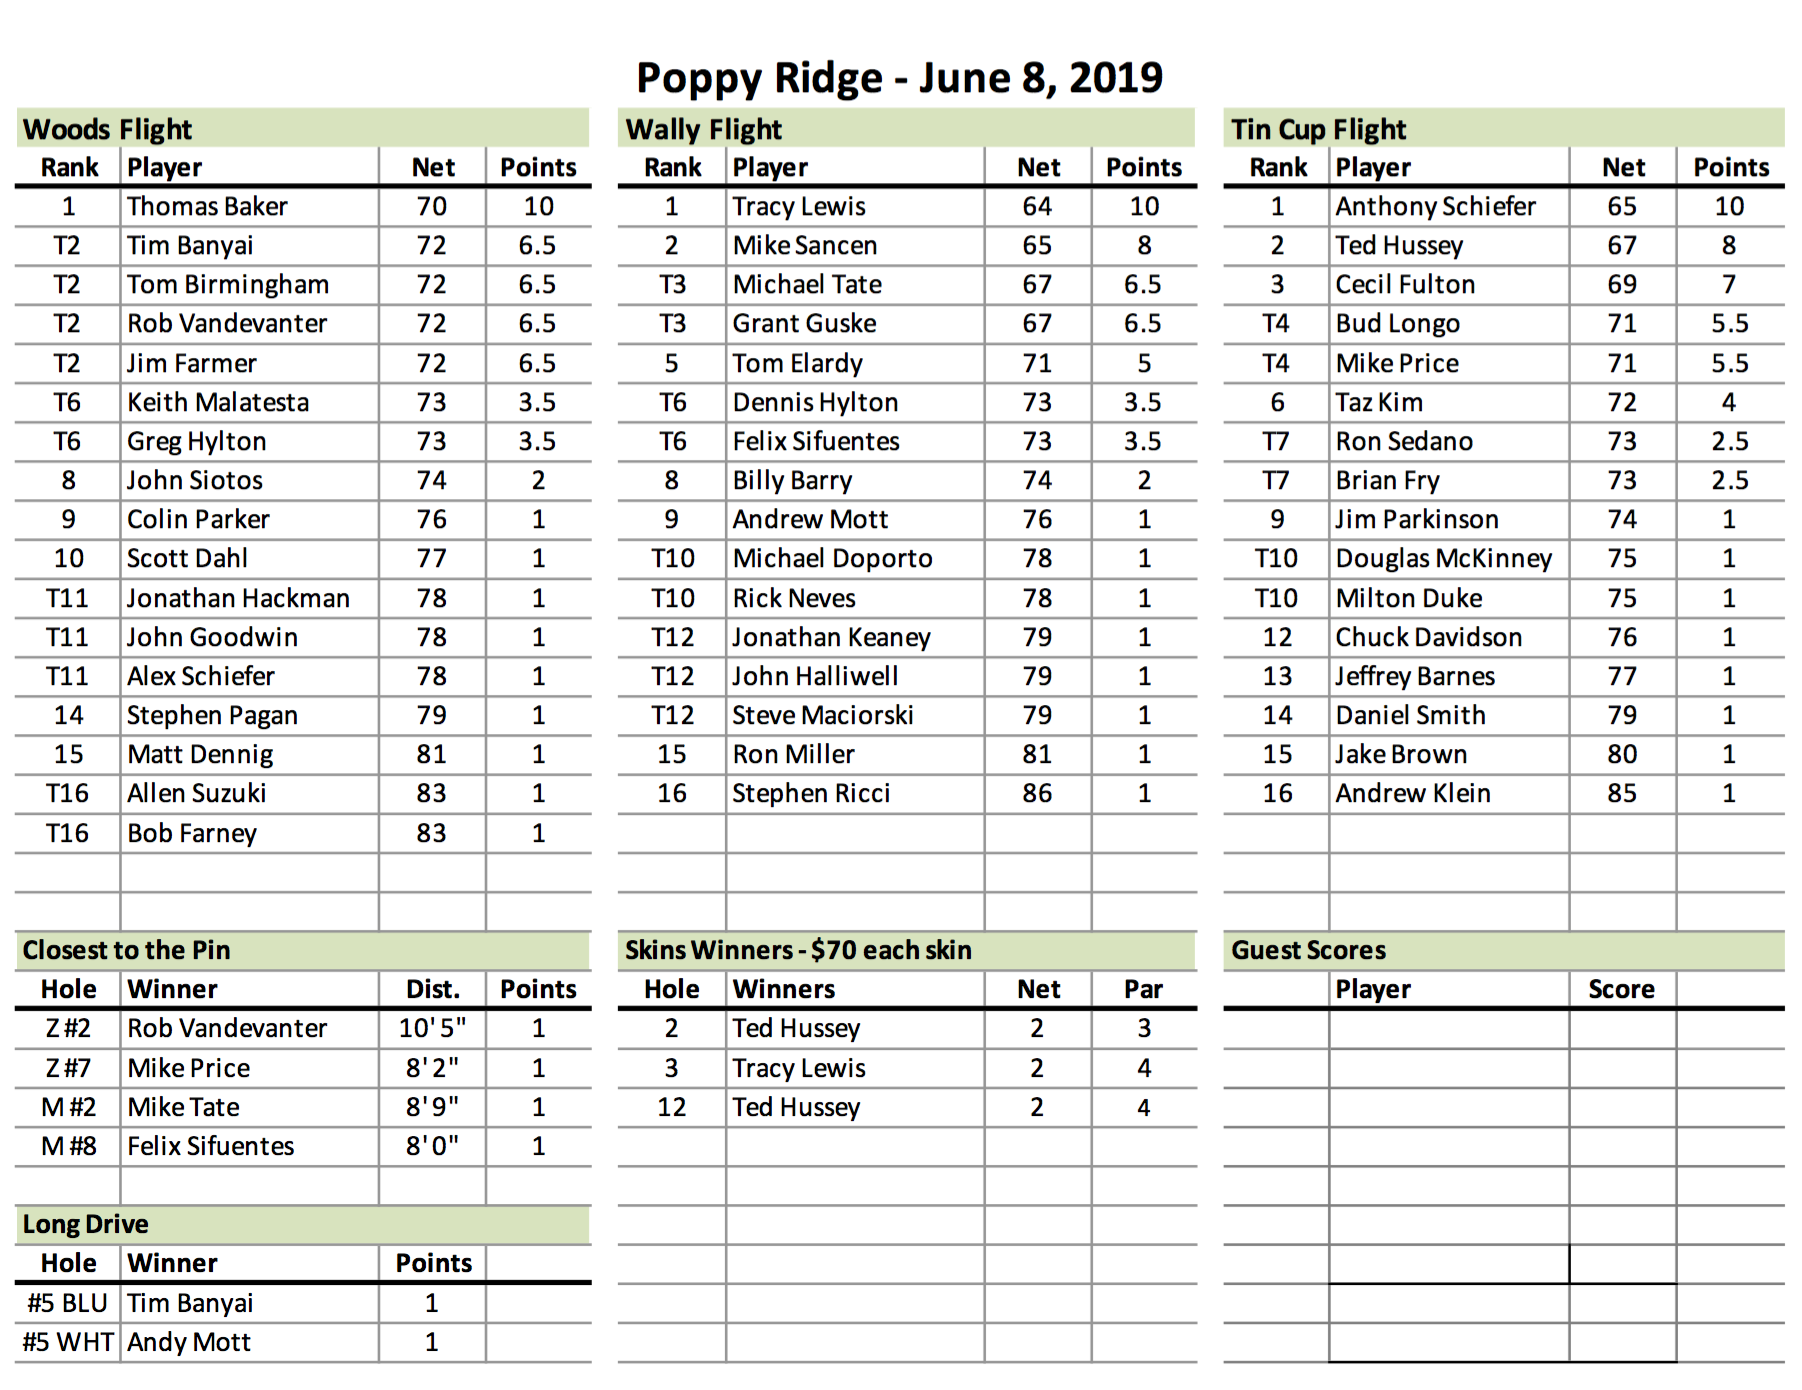 Poppy Ridge Results